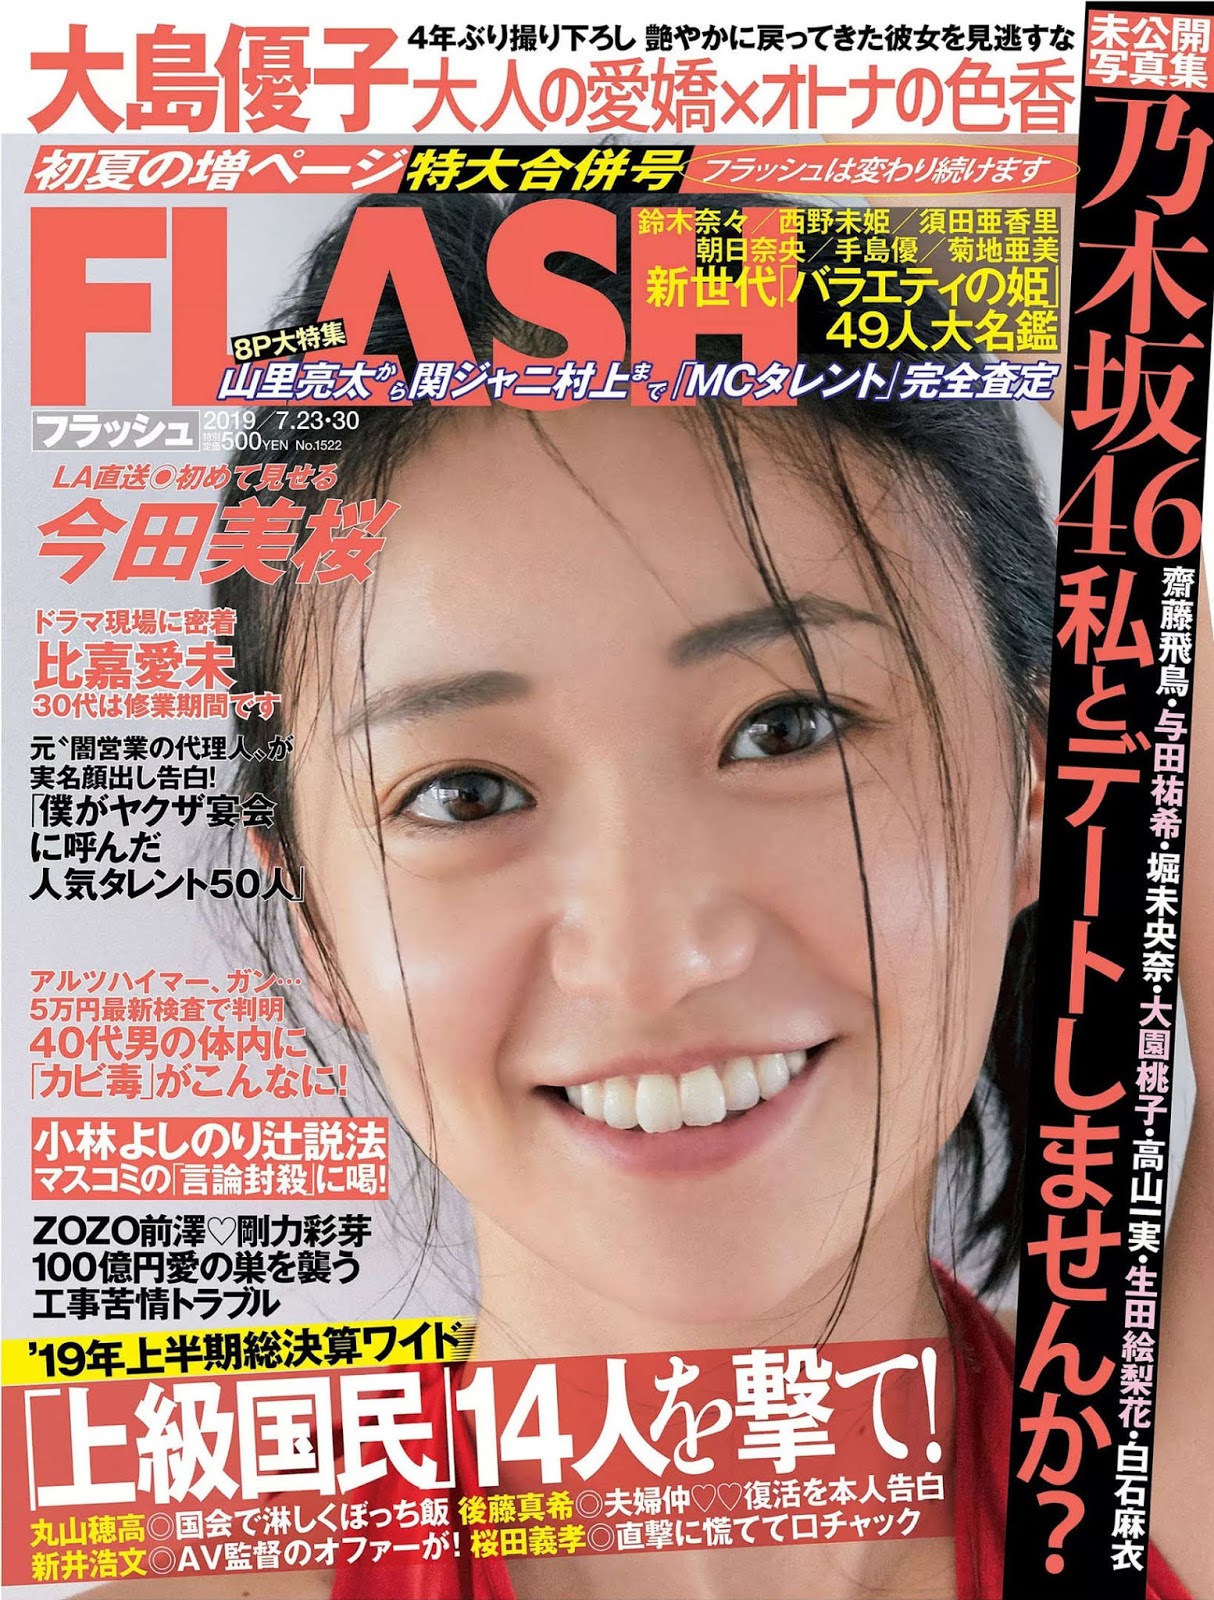 Yuko Oshima 大島優子, FLASH 2019.07.23-30 (フラッシュ 2019年7月23-30日号)